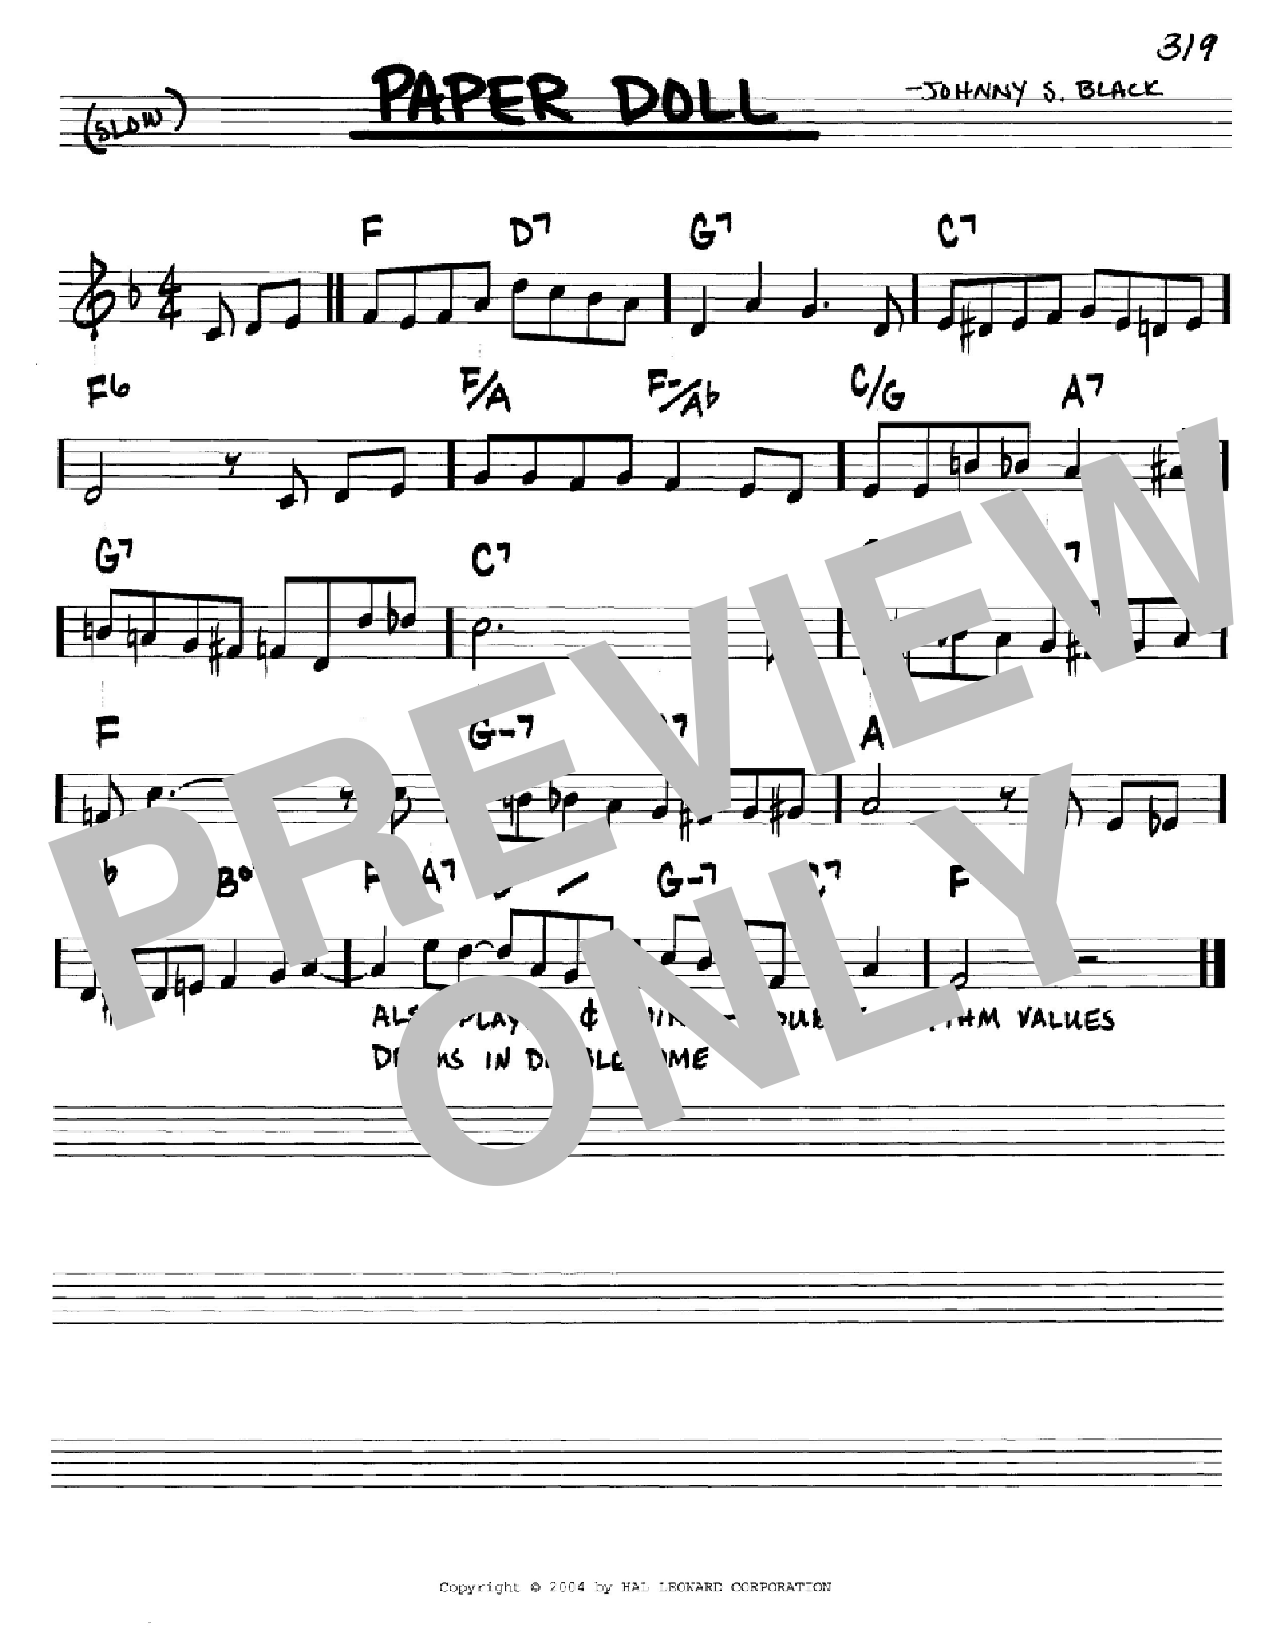 Johnny S. Black Paper Doll Sheet Music Notes & Chords for Banjo - Download or Print PDF